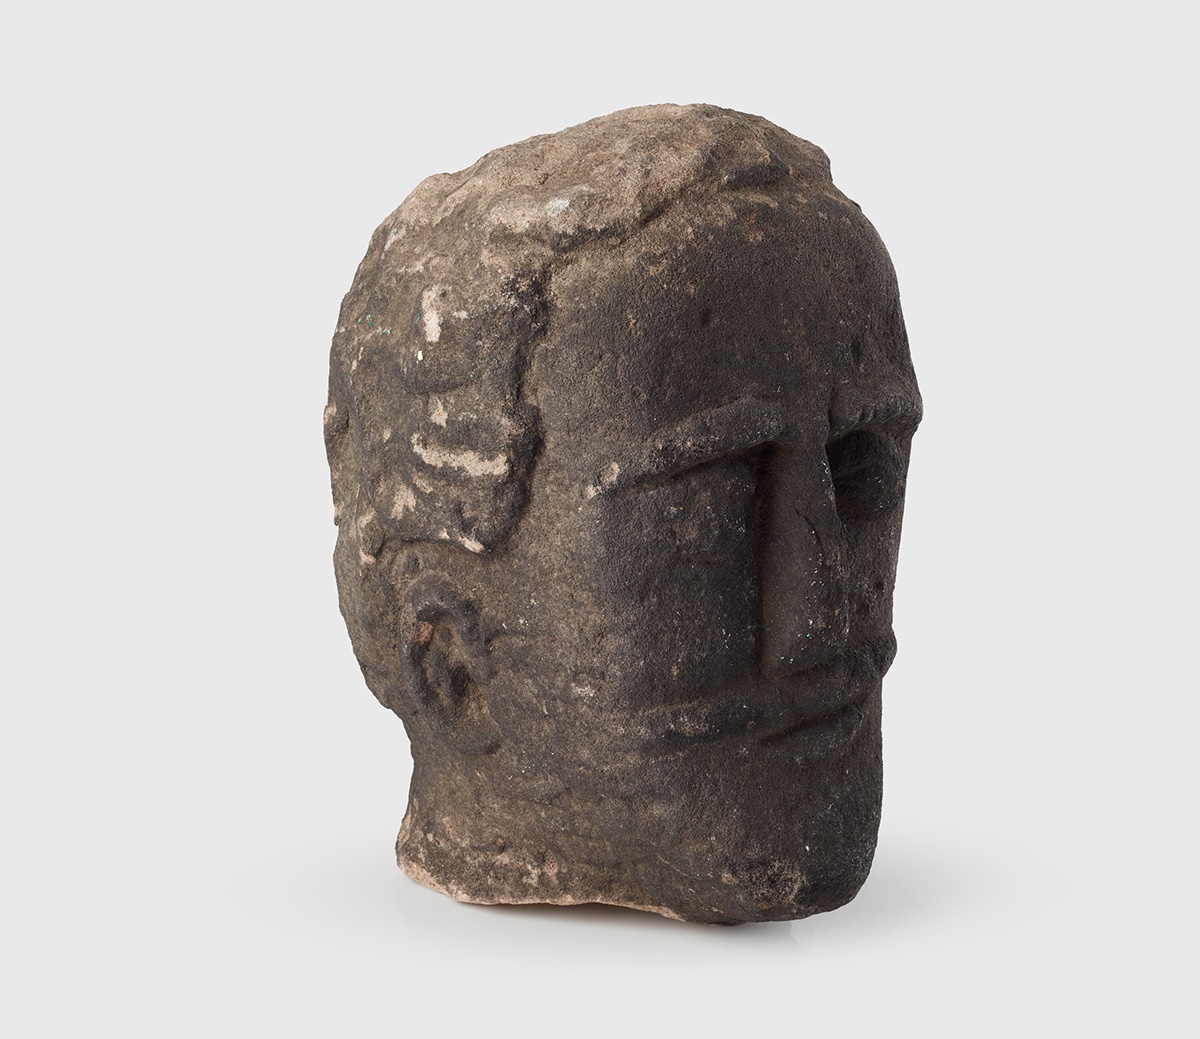 LOT 55 | ANCIENT CELTIC STONE HEAD | UNITED KINGDOM, LIKELY 1ST CENTURY B.C. £10,000 - £15,000 + fees